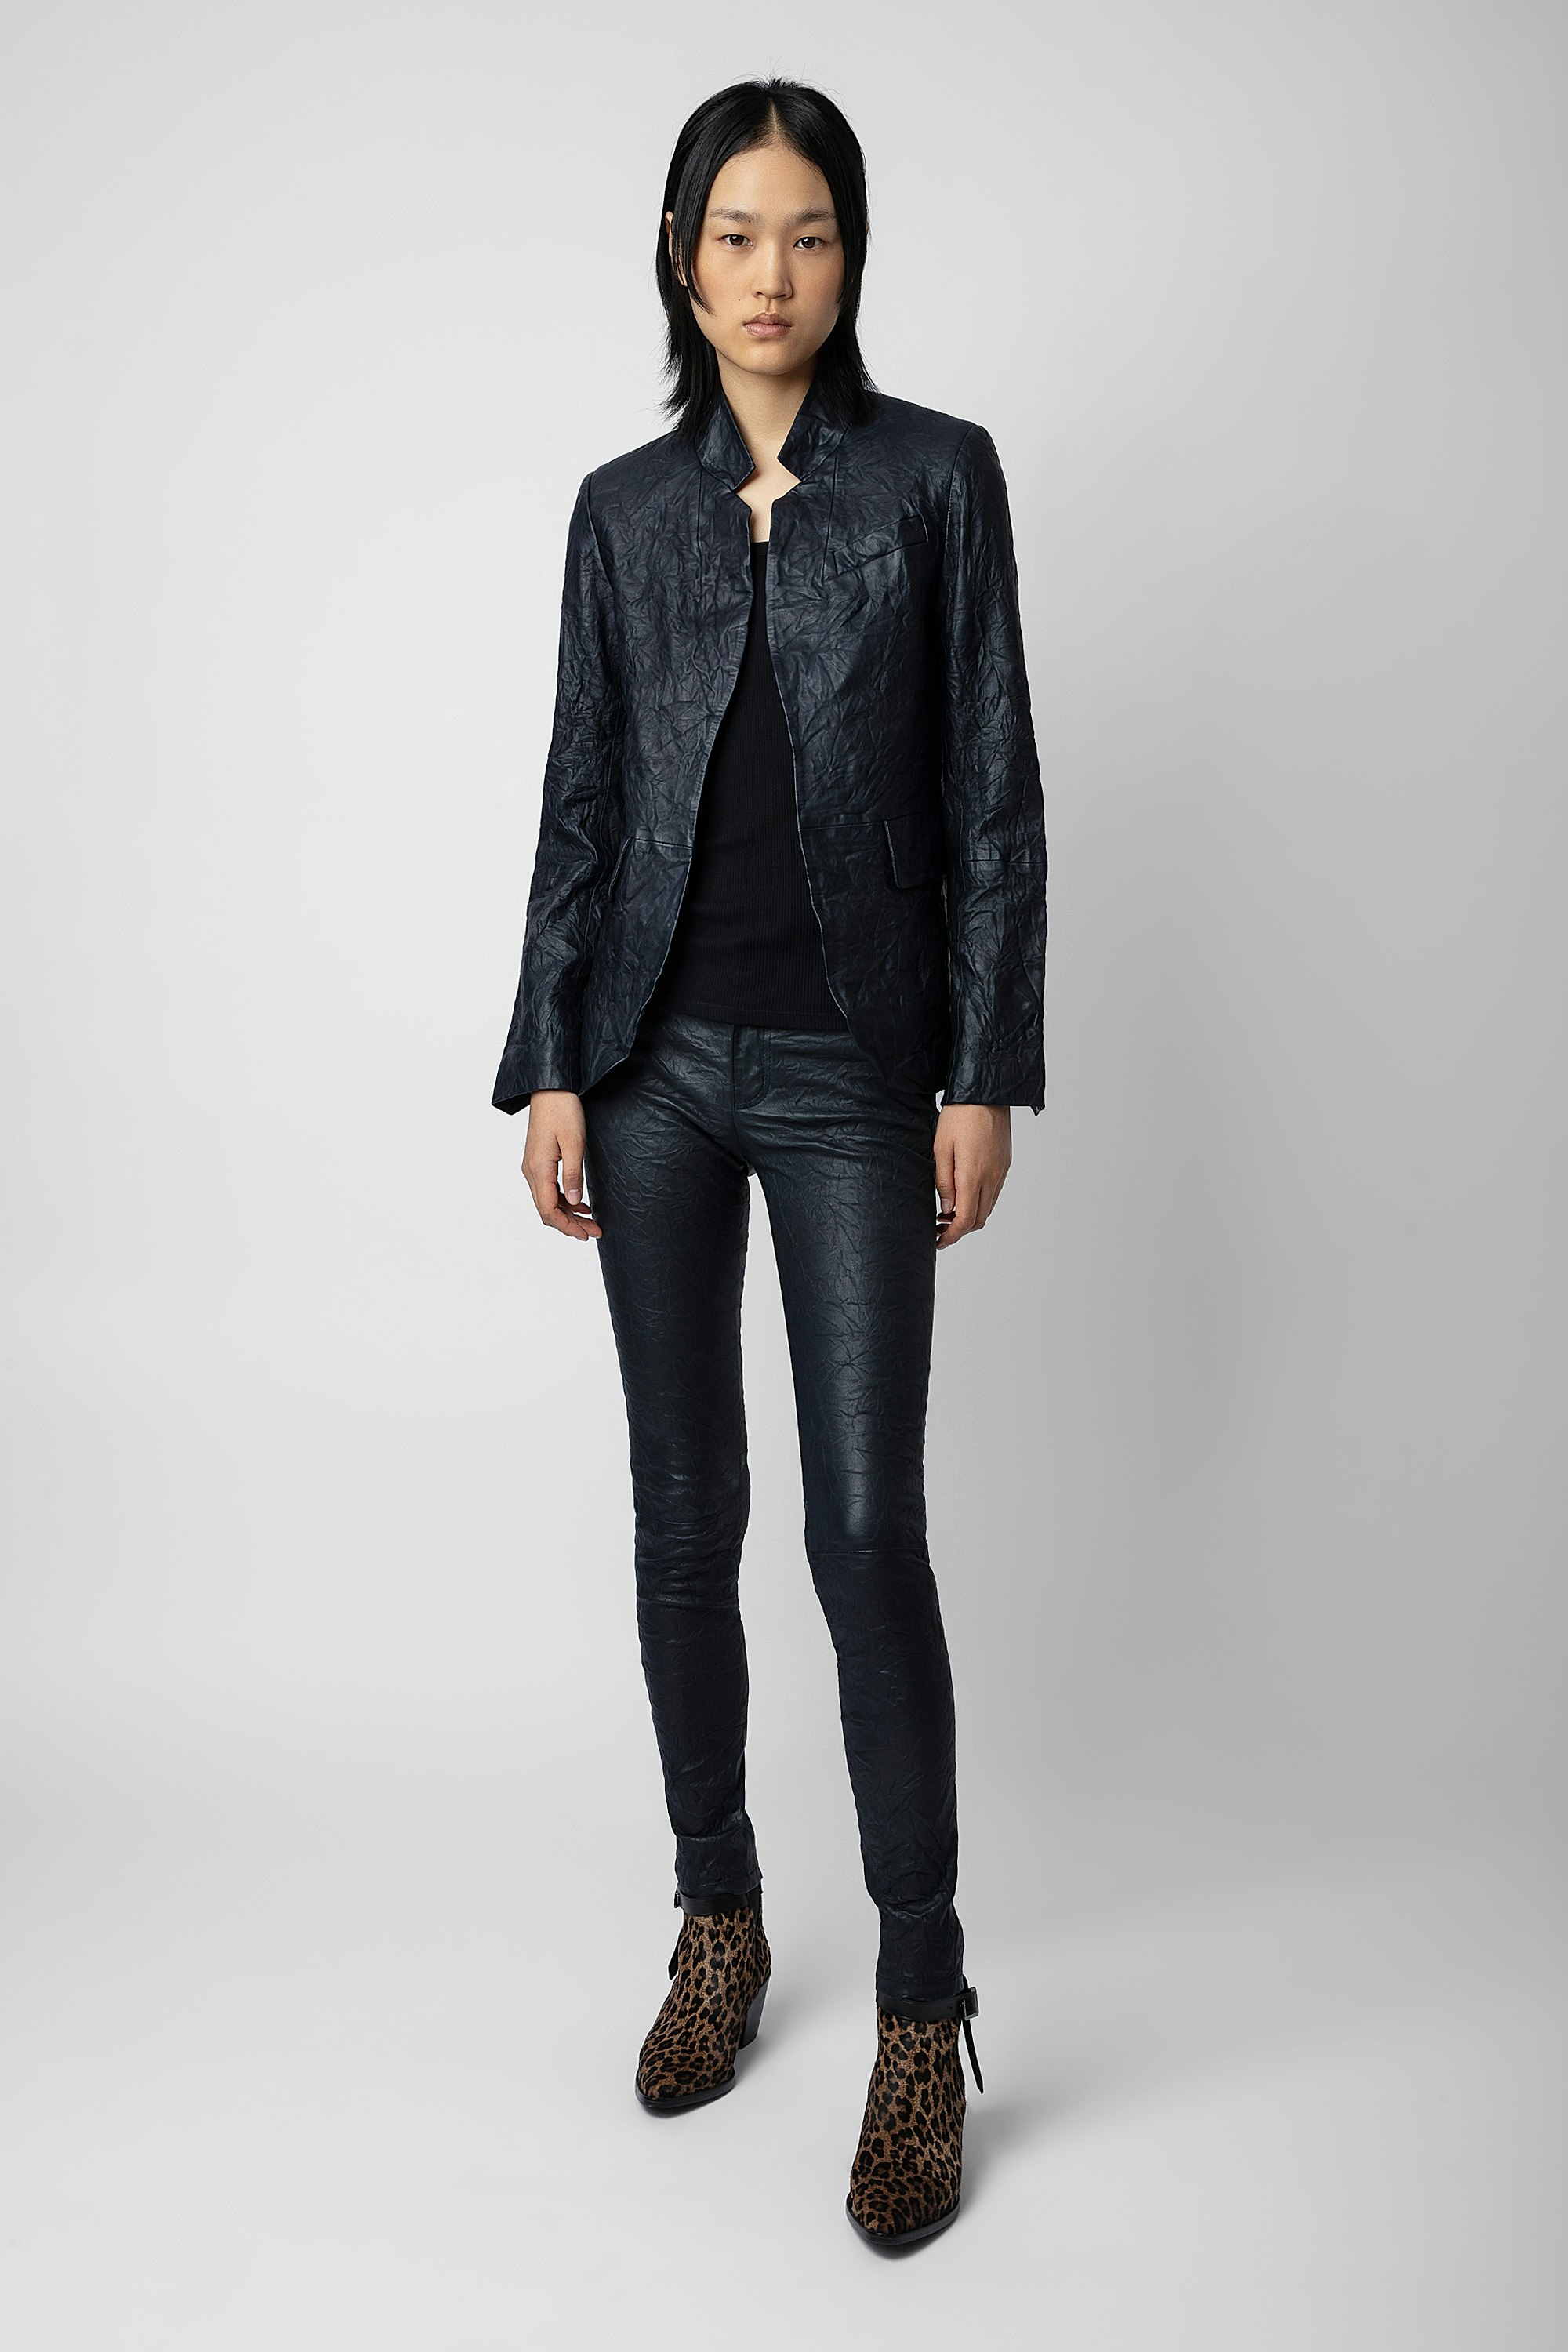 Very Crinkled Leather Blazer - Women’s navy blue crinkled leather blazer.